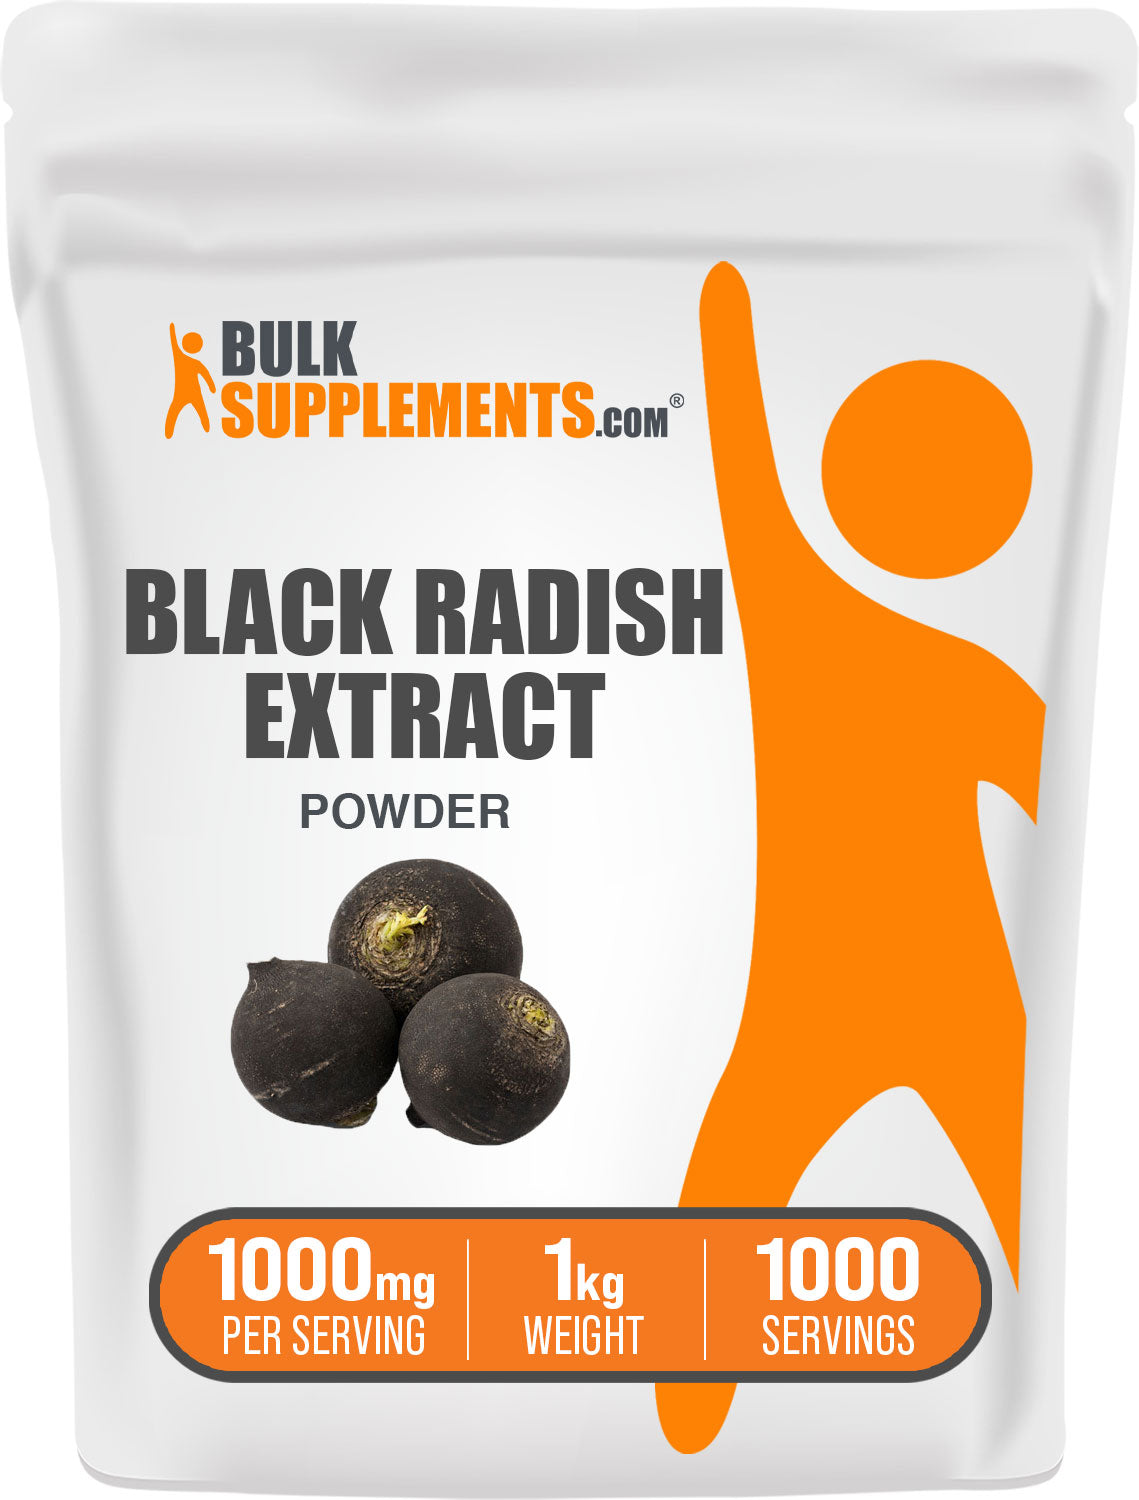 1kg of black radish powder